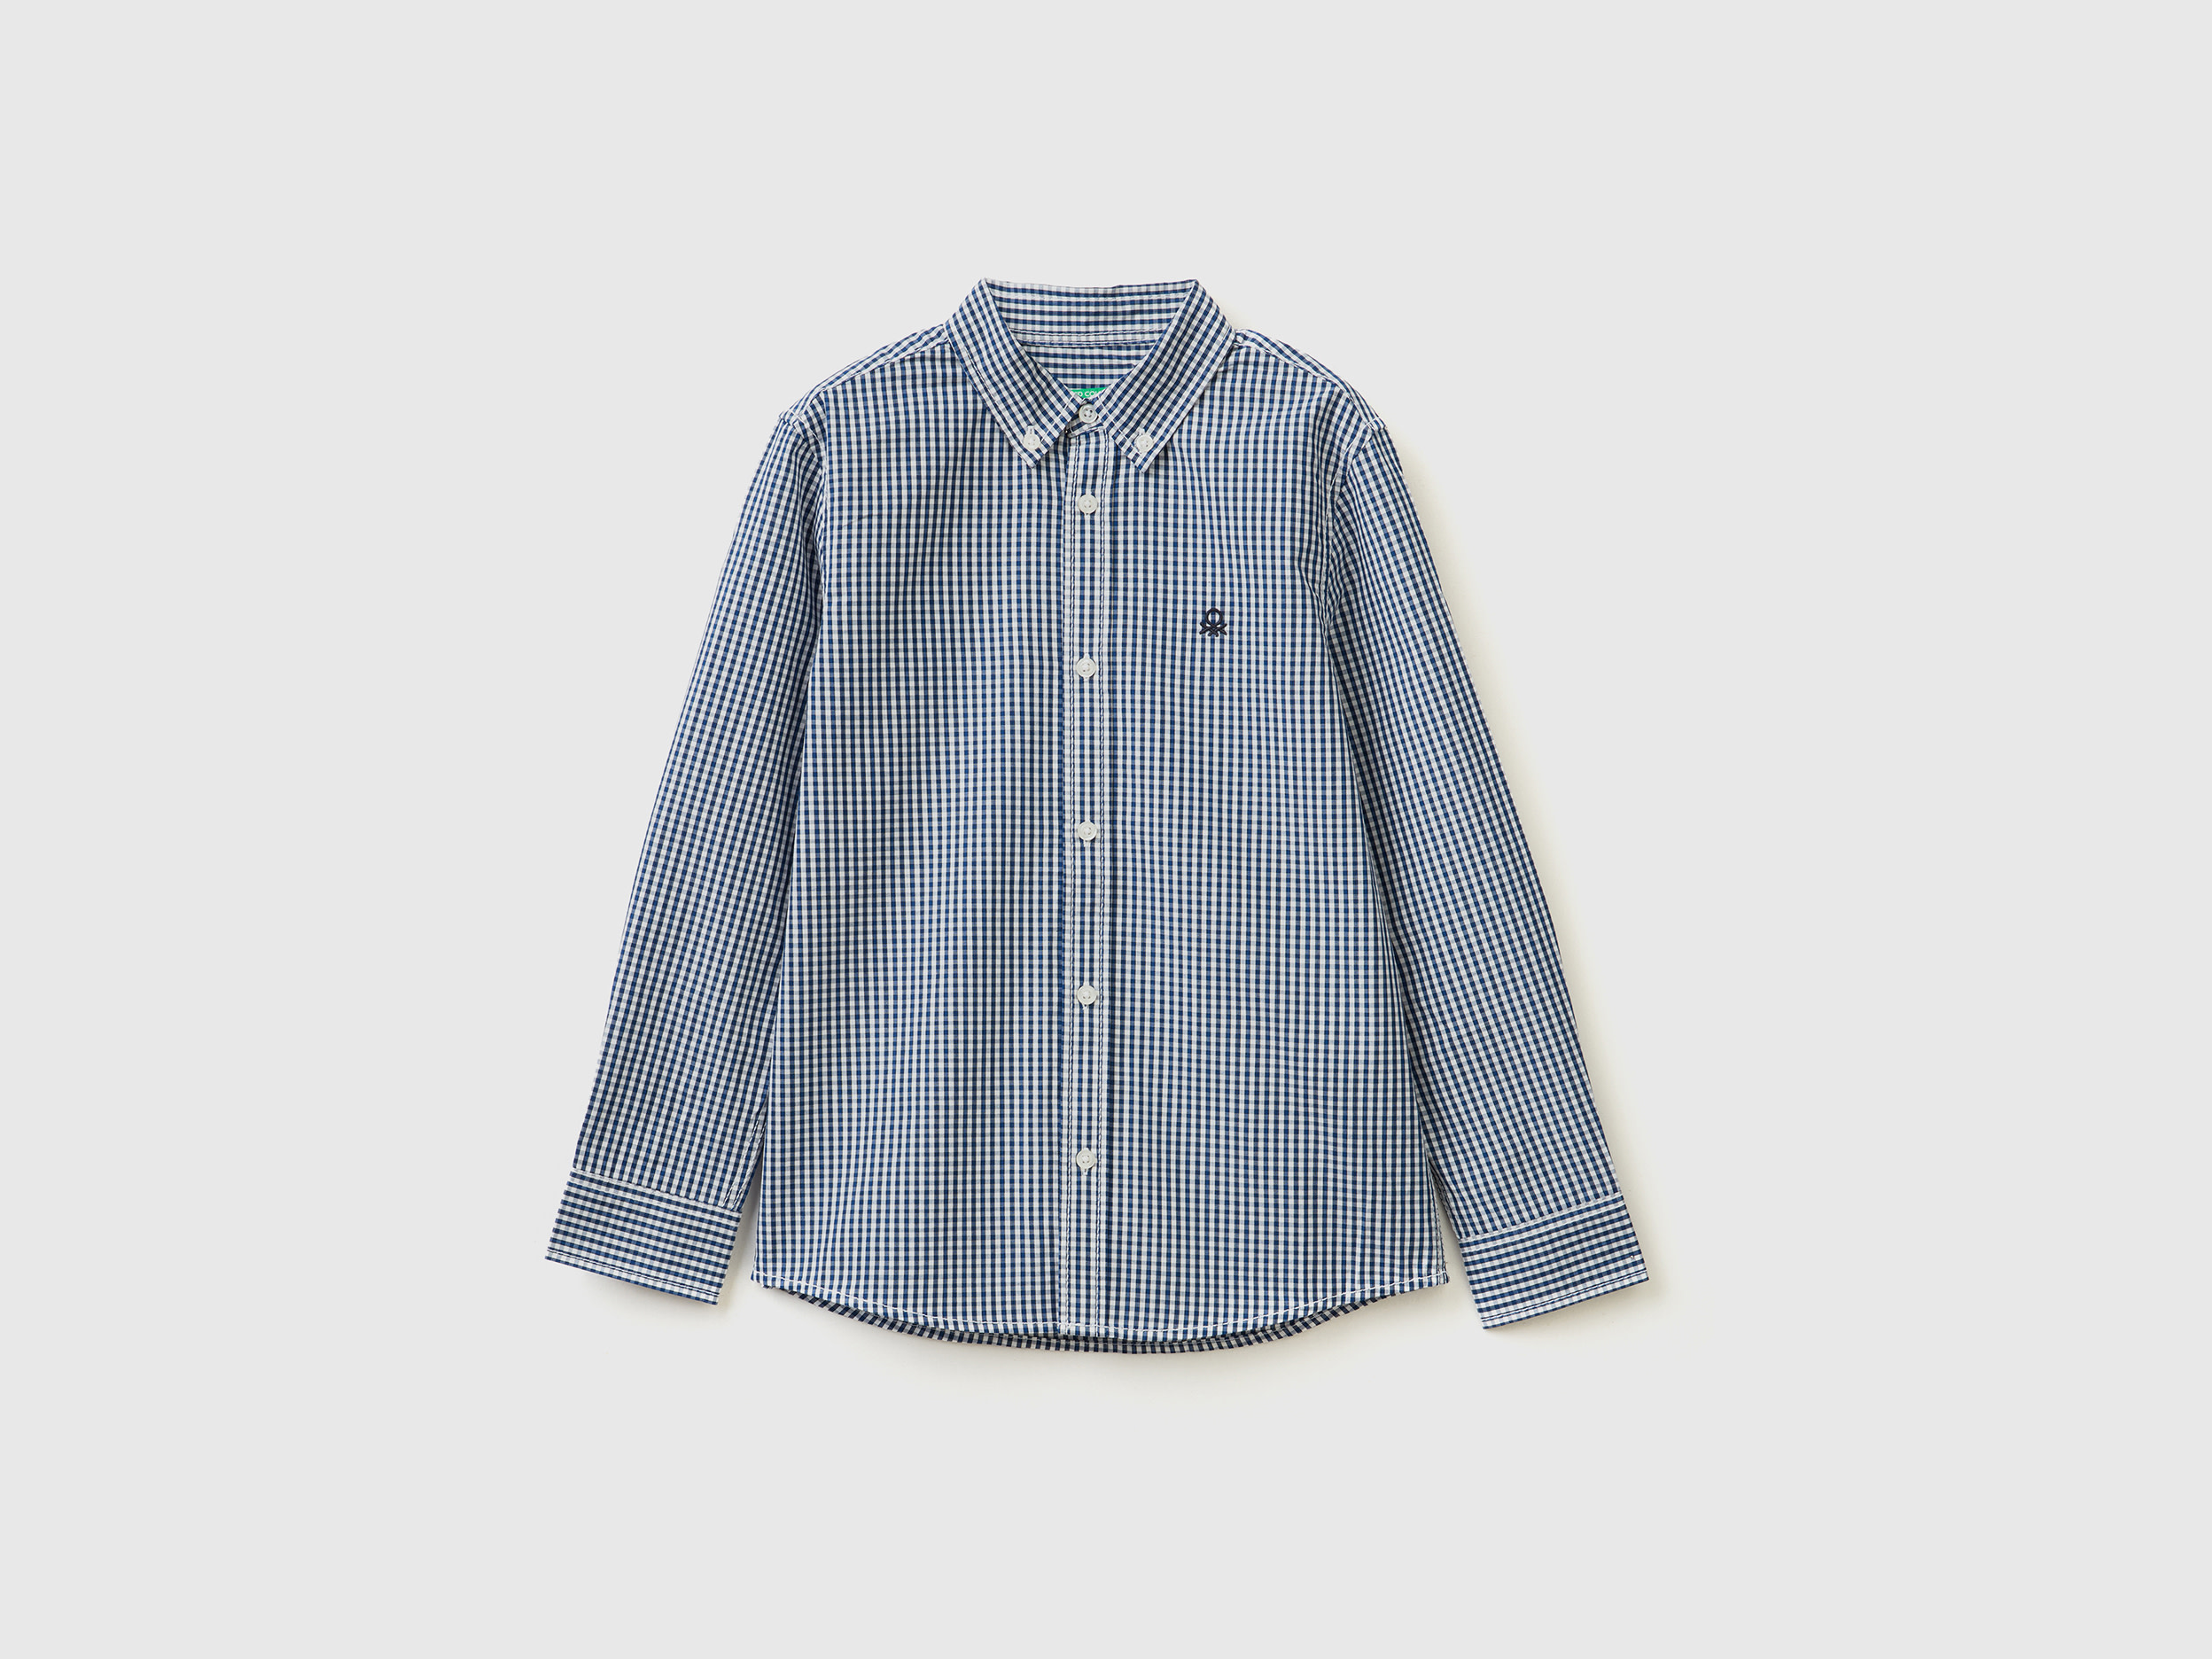 Benetton, Sporty 100% Cotton Shirt, size 3XL, Air Force Blue, Kids